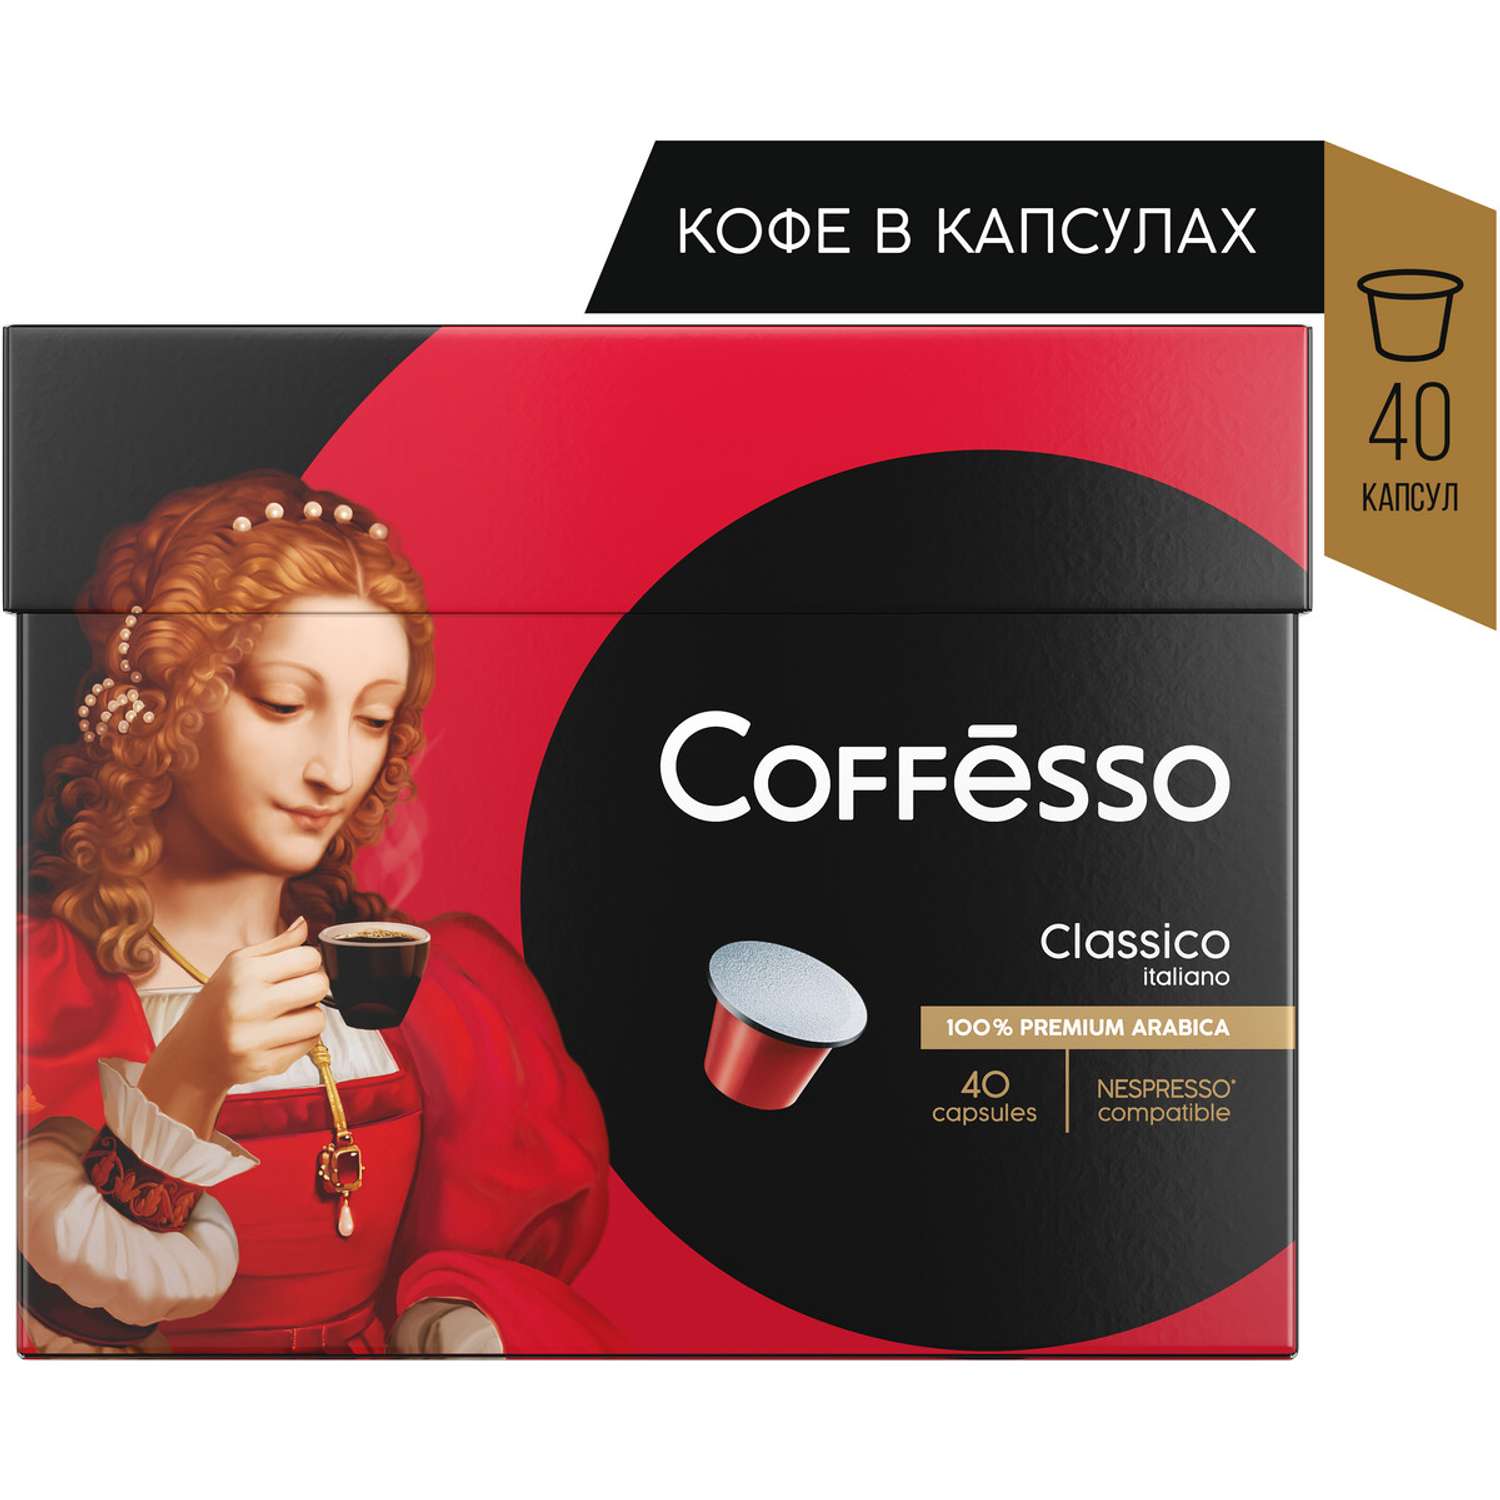 Кофе в капсулах Coffesso Classico Italiano набор 40 шт по 5 гр - фото 2